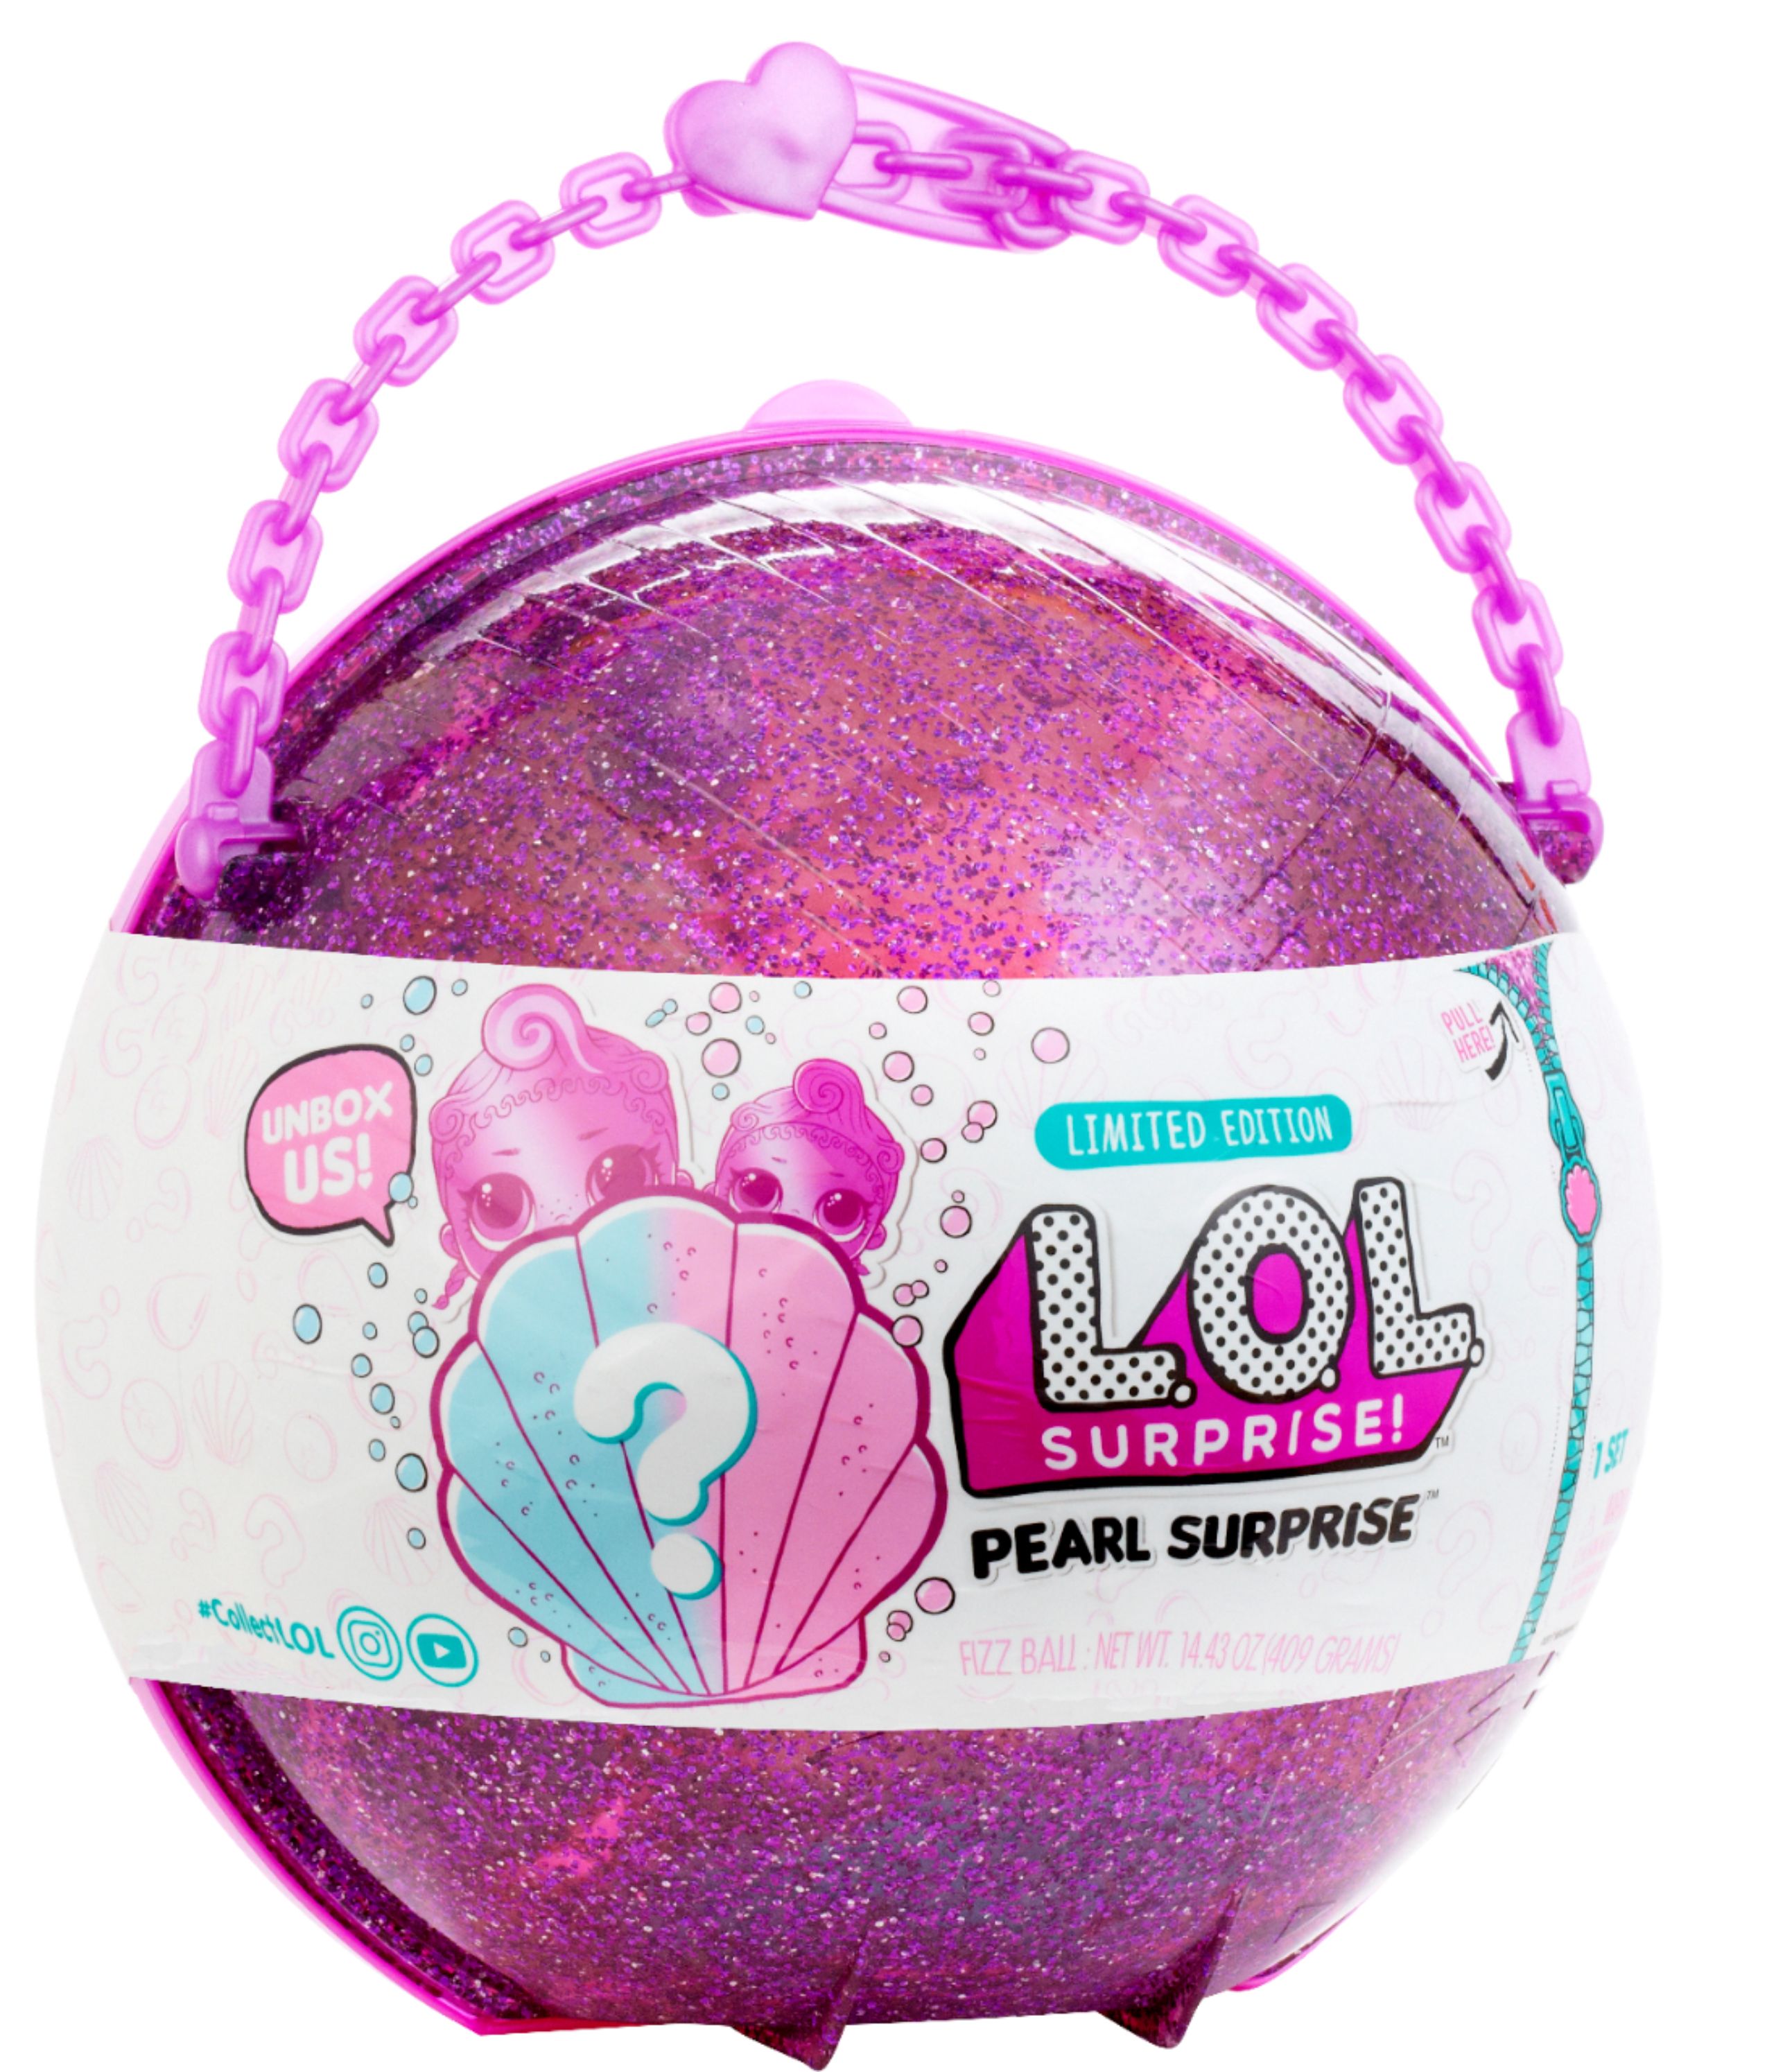 L.O.L. Surprise! Big Surprise Limited Edition Glitter Ball - 9 oz total